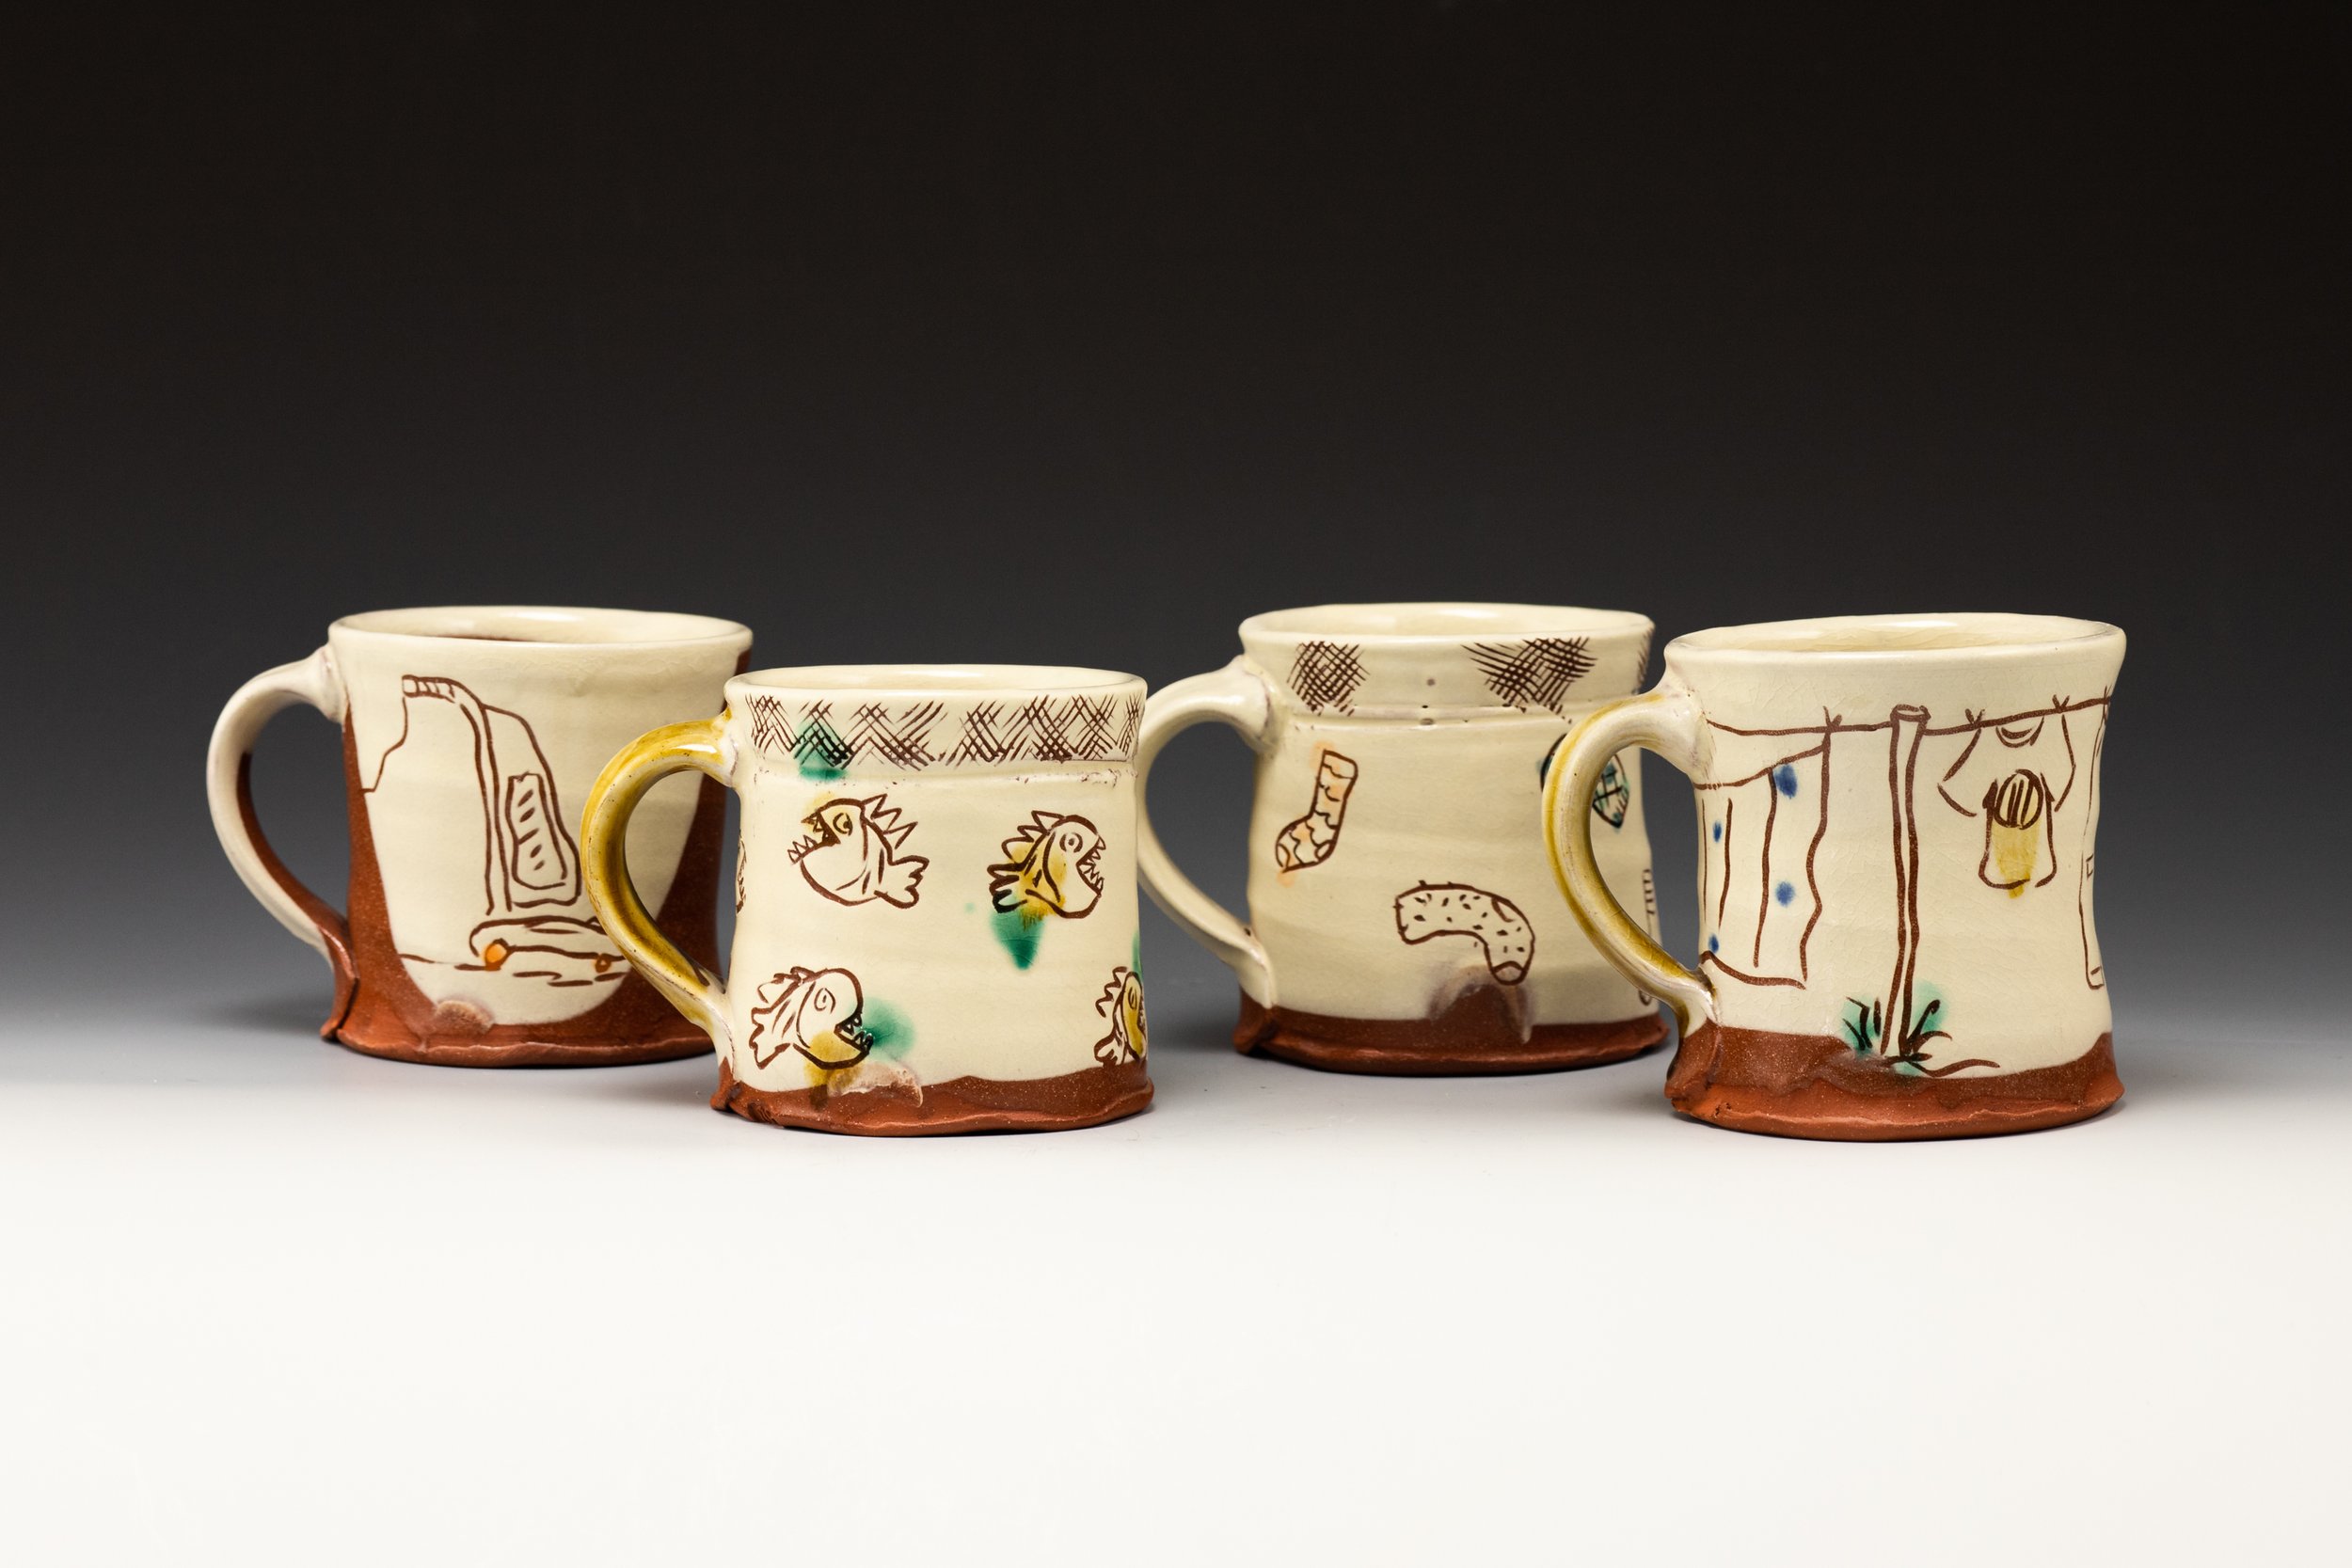 Ron Philbeck, set of 4 mugs, 3.75" x 5" x 4" each